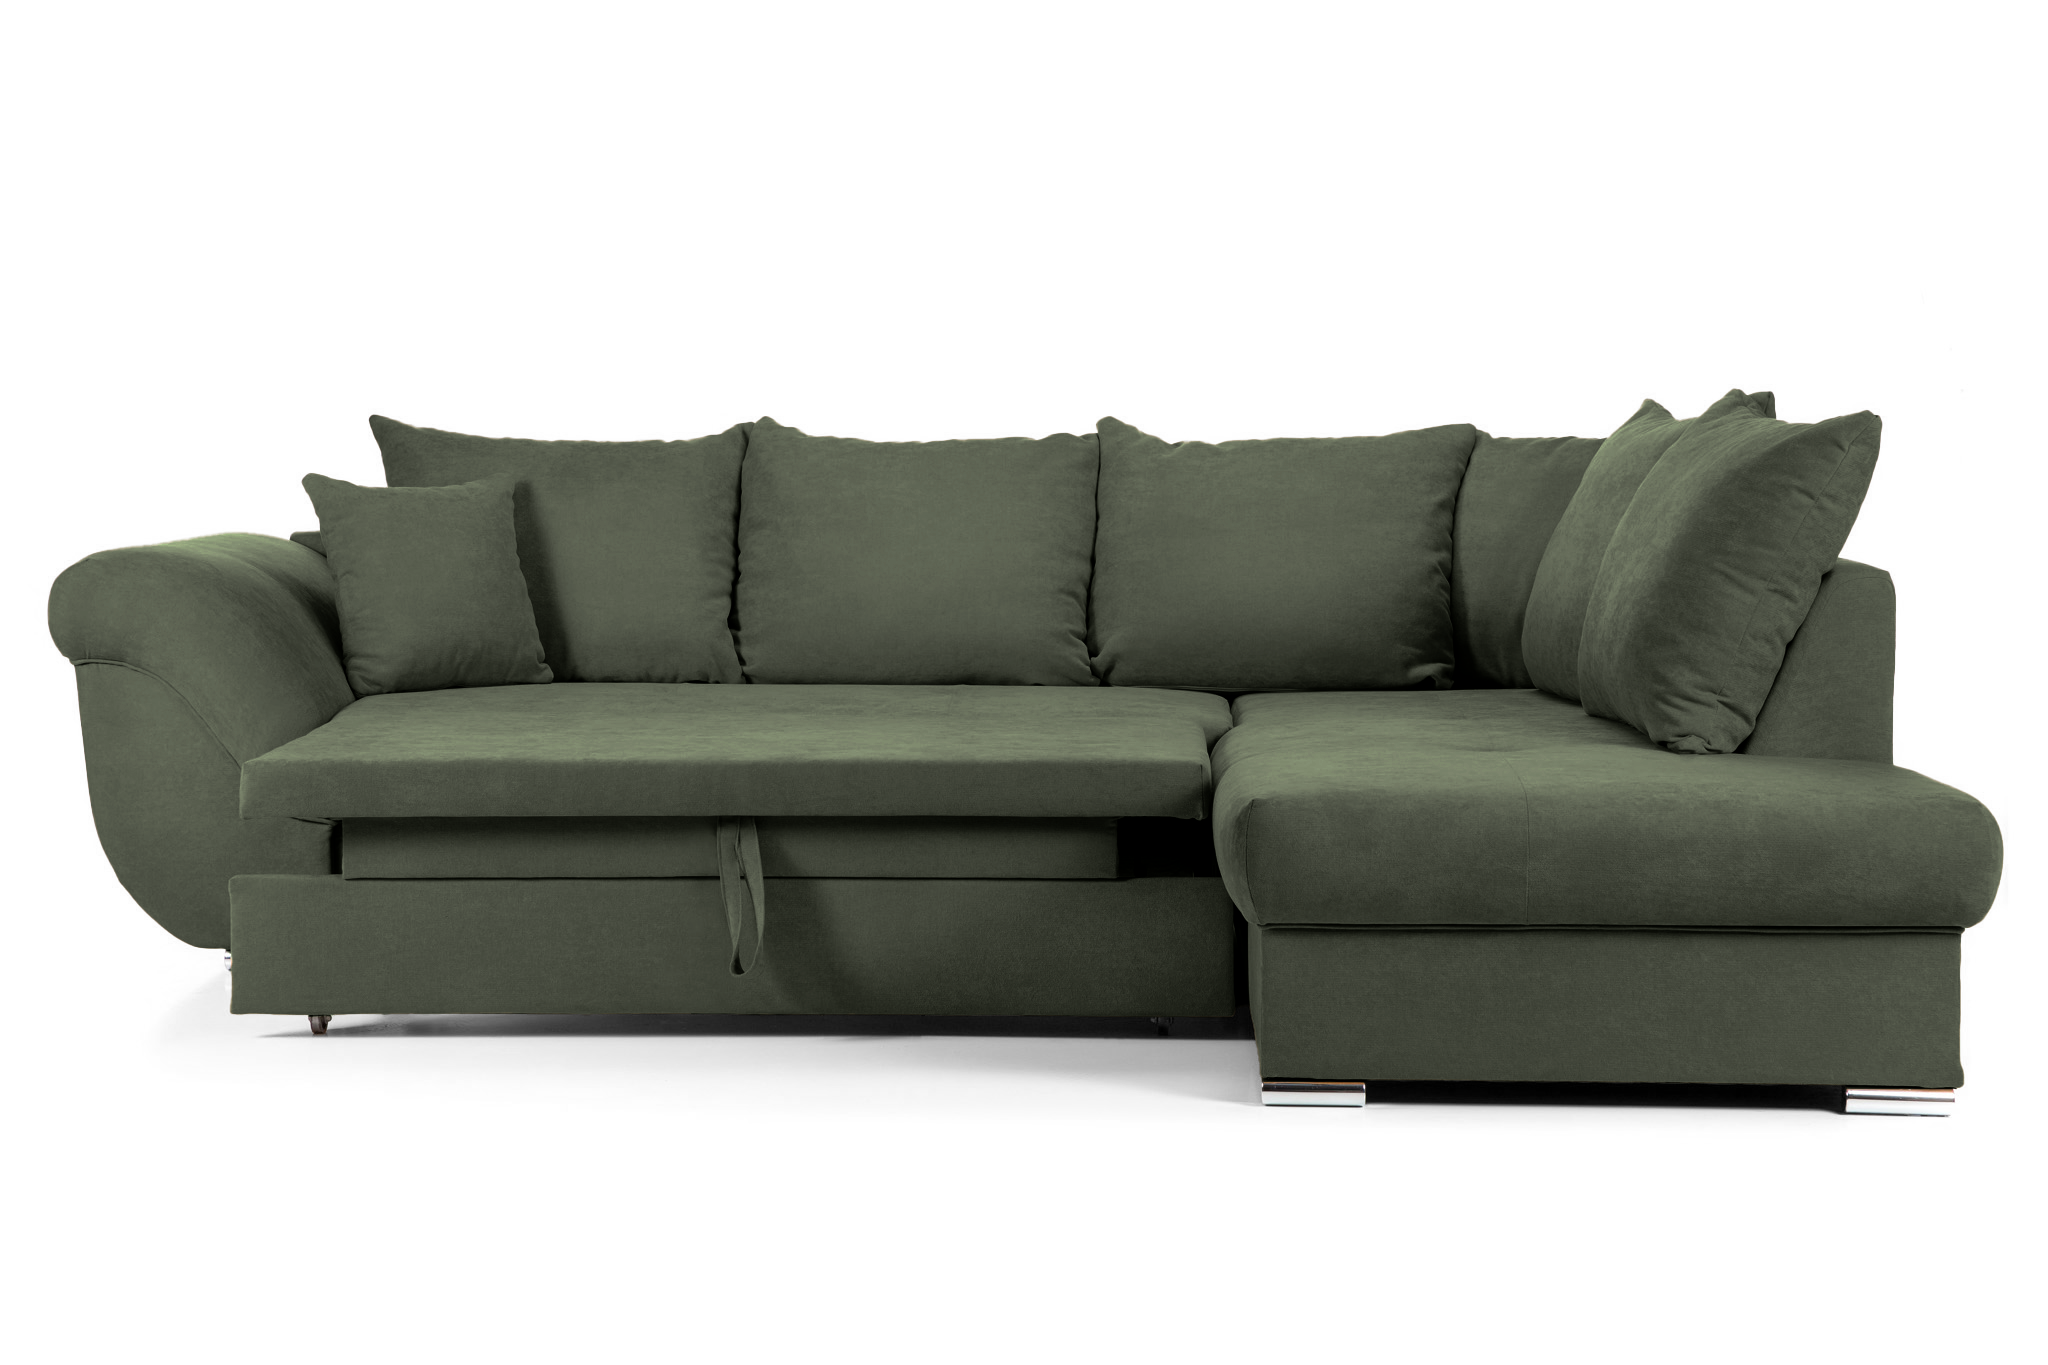 Colțar Extensibil SANTOS, variante stânga/dreapta, 295x215x80 cm, Prestigehome.ro, #color_Verde-enjoy